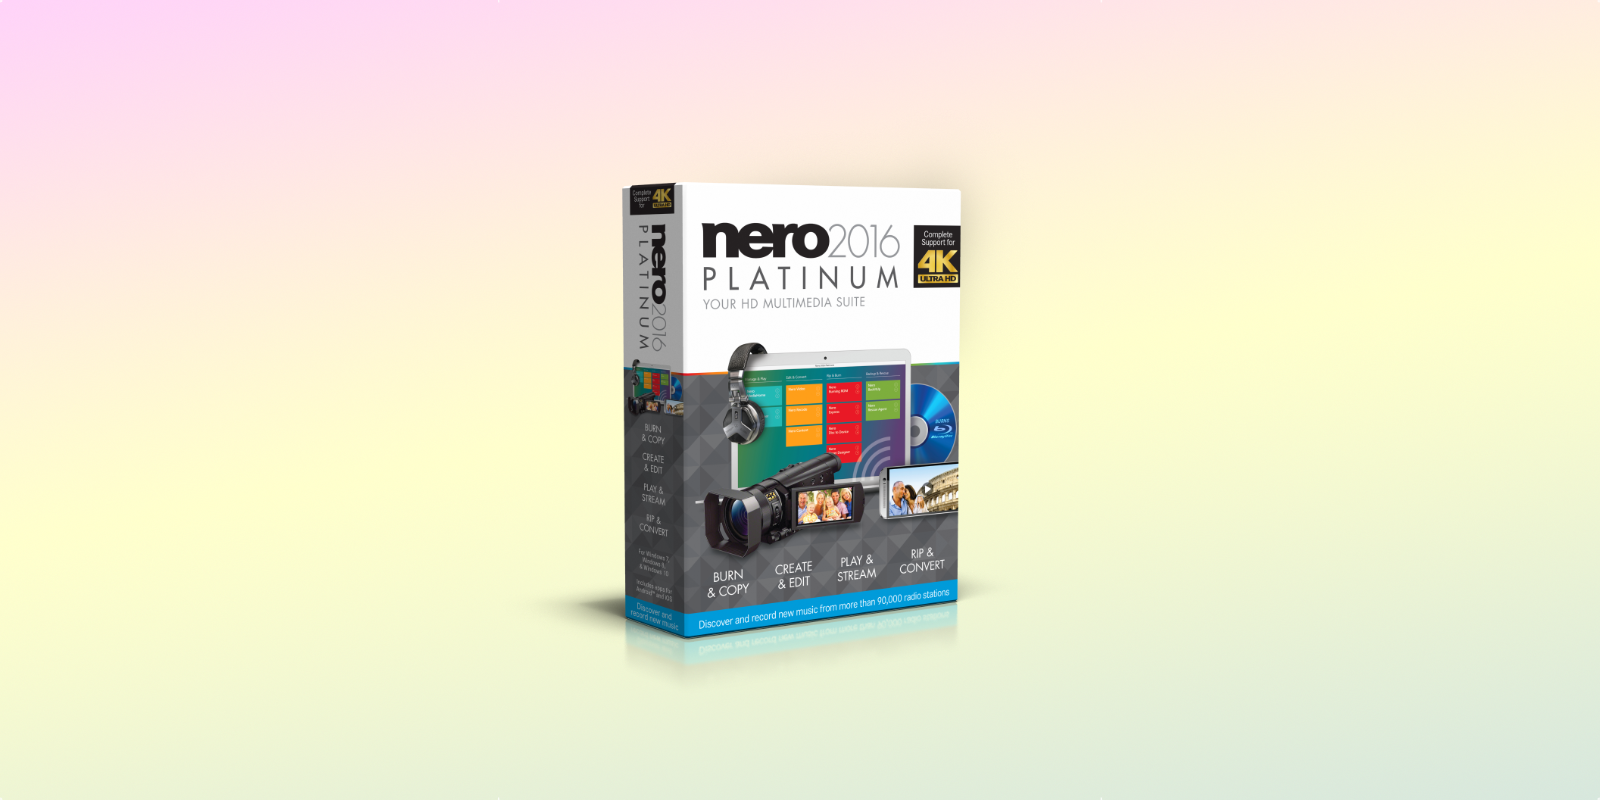 Nero 2016 Platinum Box Shot